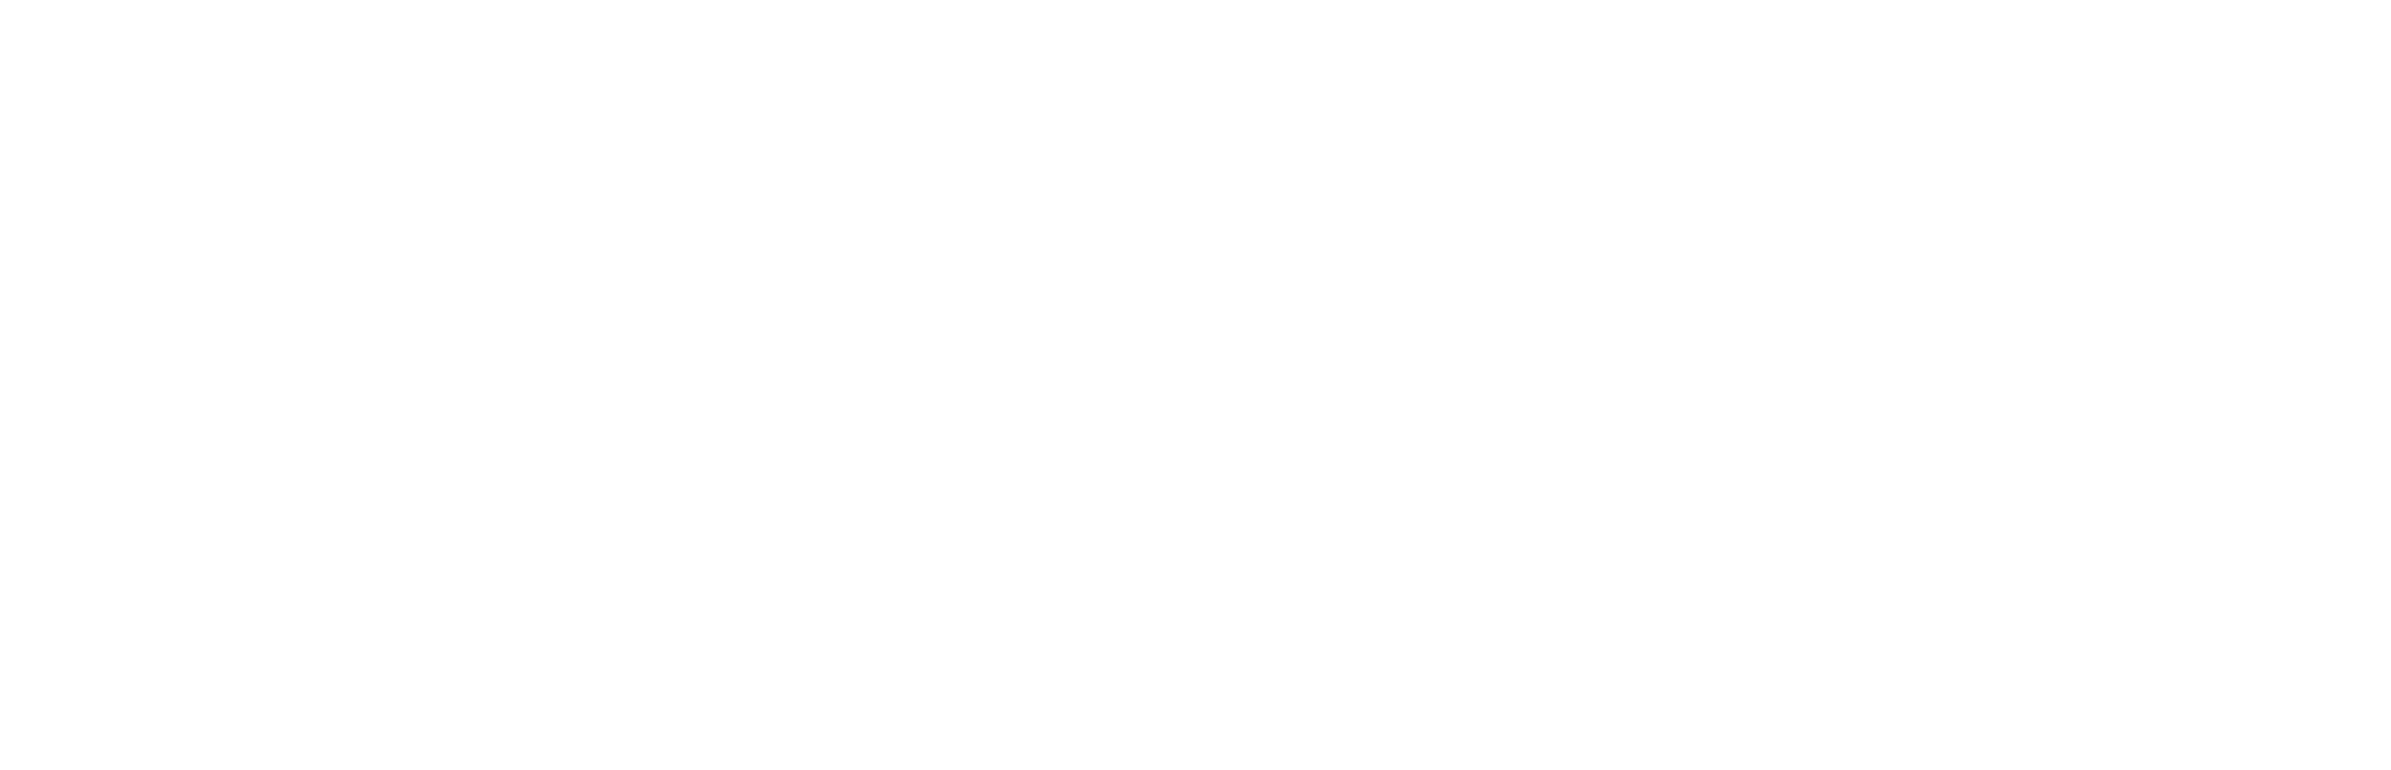 Sang Min Lim Law Firm logo